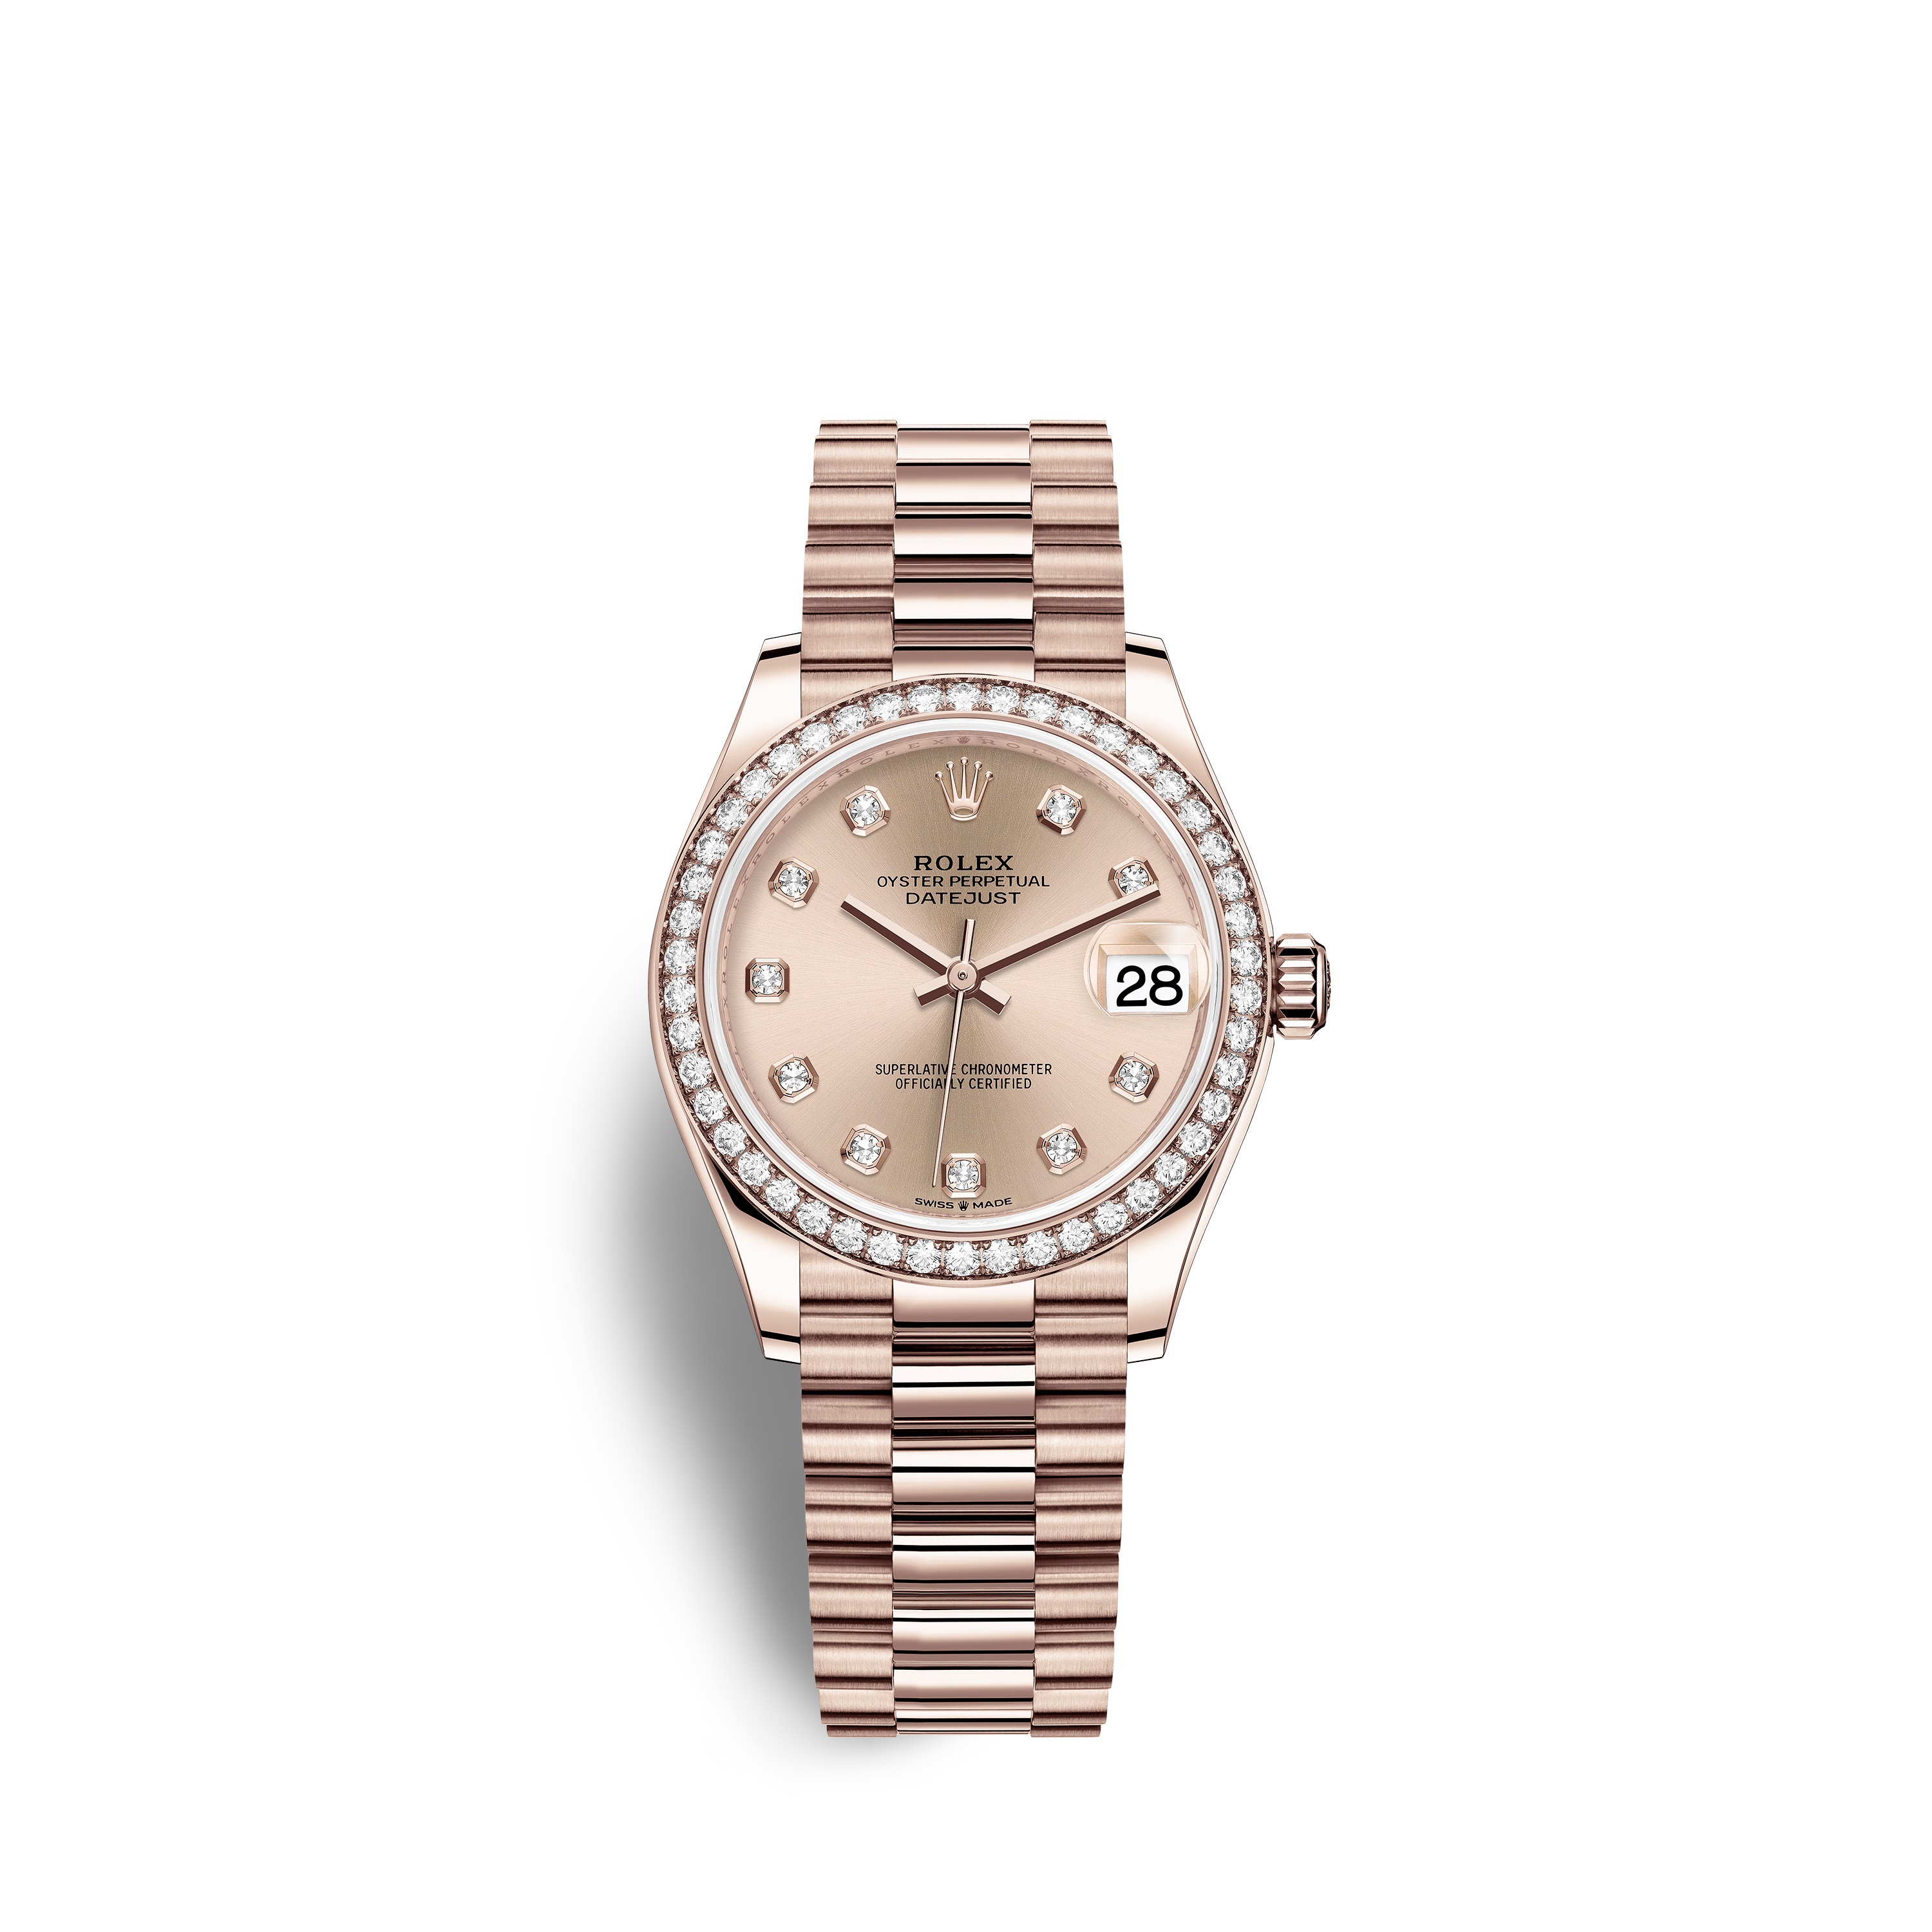 Datejust 31 278285RBR Rose Gold & Diamonds Watch (Rosé Colour Set with Diamonds)